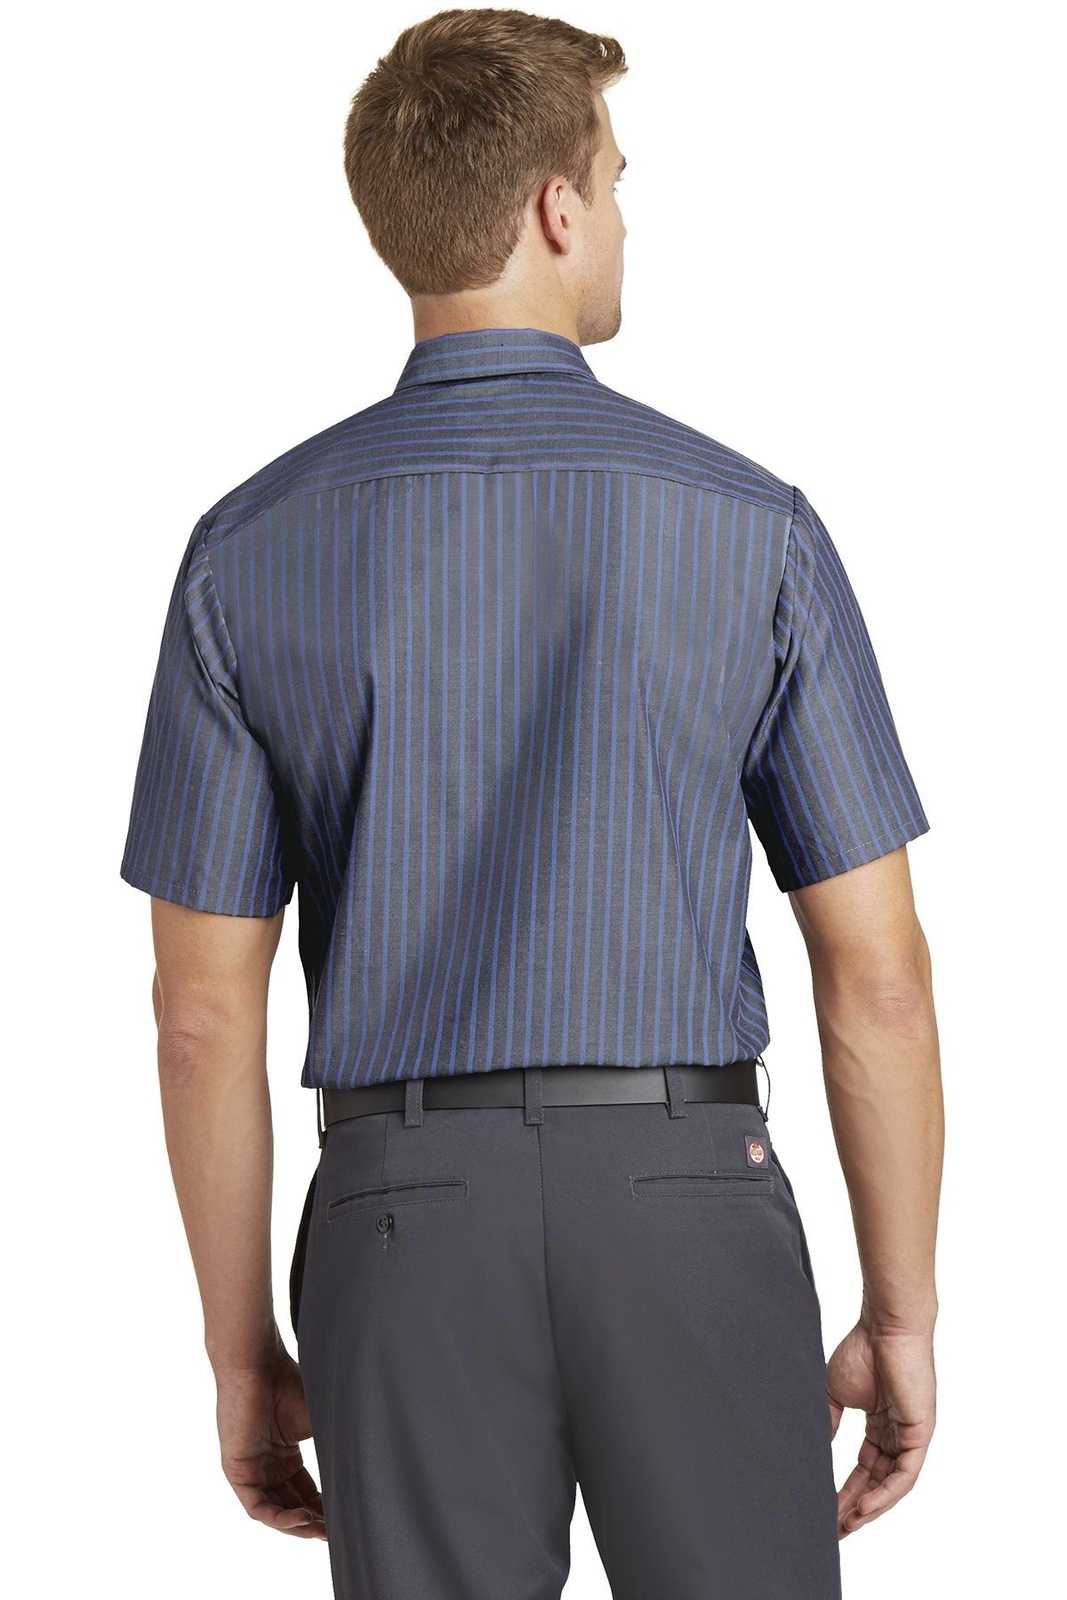 Red Kap CS20LONG Red Kap Long Size, Short Sleeve Striped Industrial Work Shirt - Gray/ Blue - HIT a Double - 2